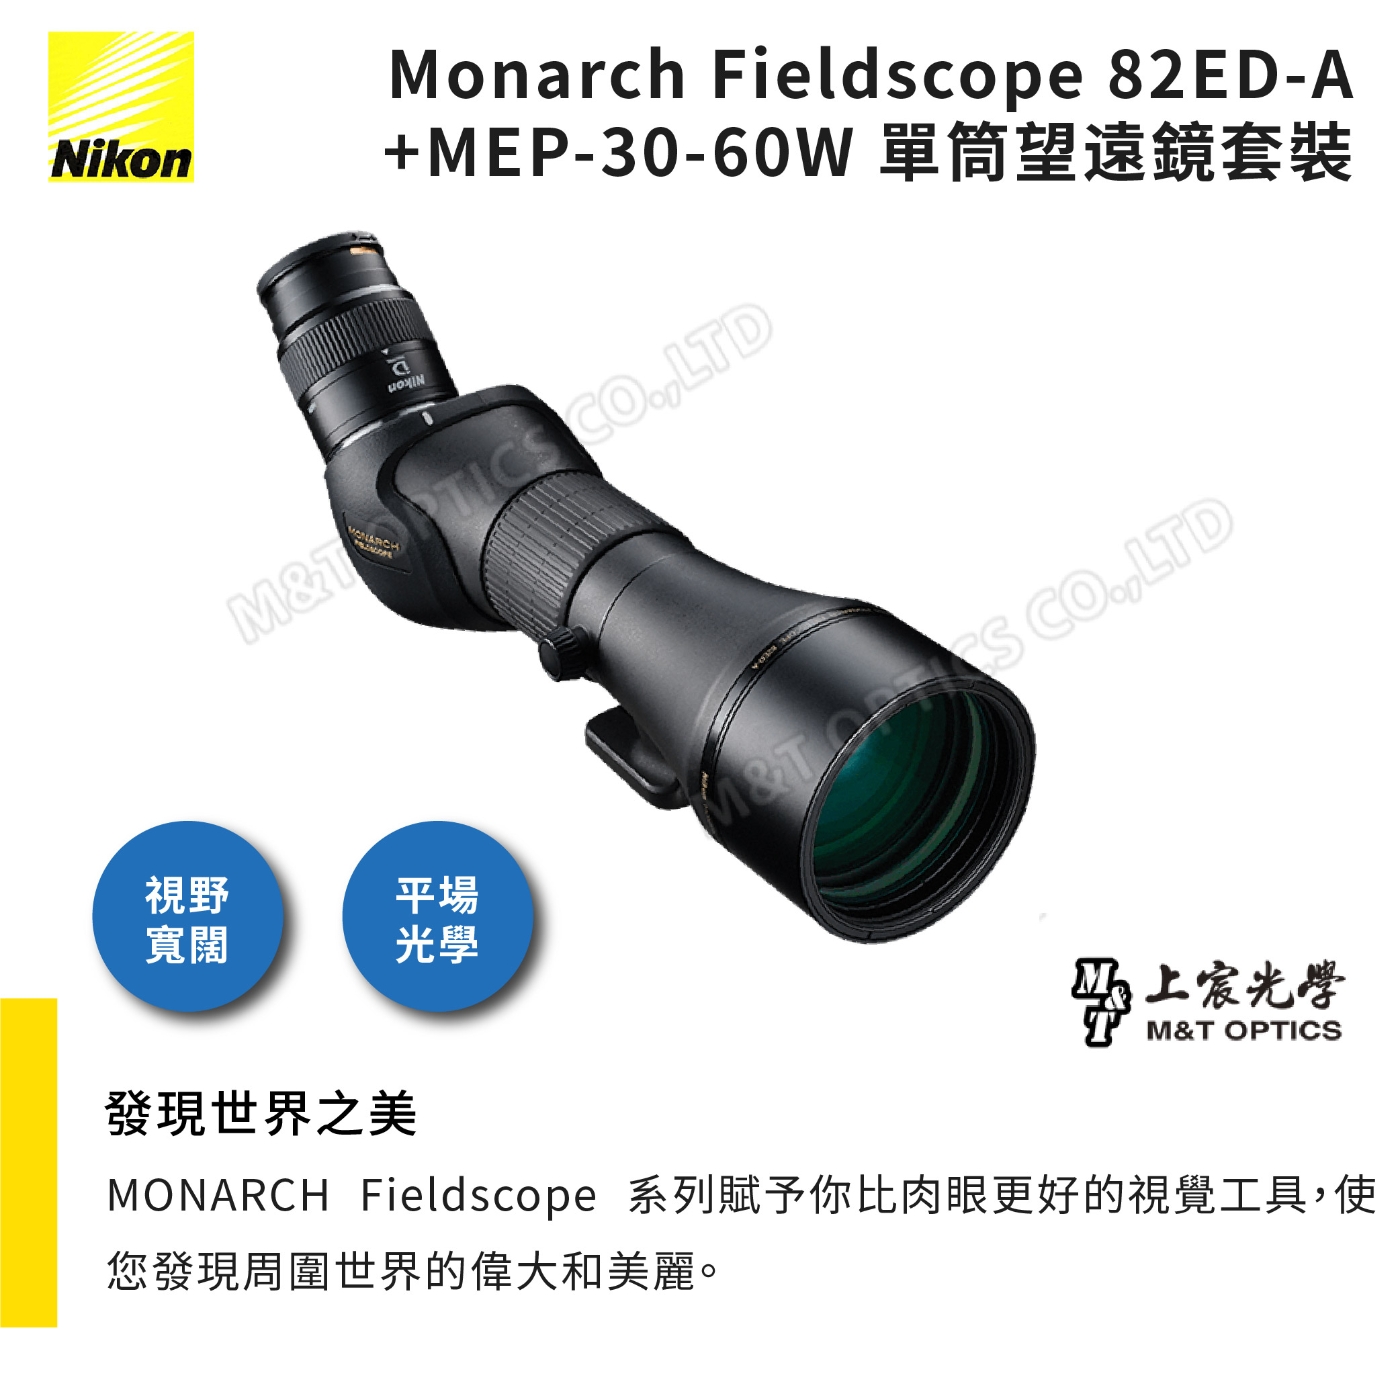 Nikon Monarch Fieldscope 82ED-A +MEP-30-60W 單筒望遠鏡- 公司貨原廠